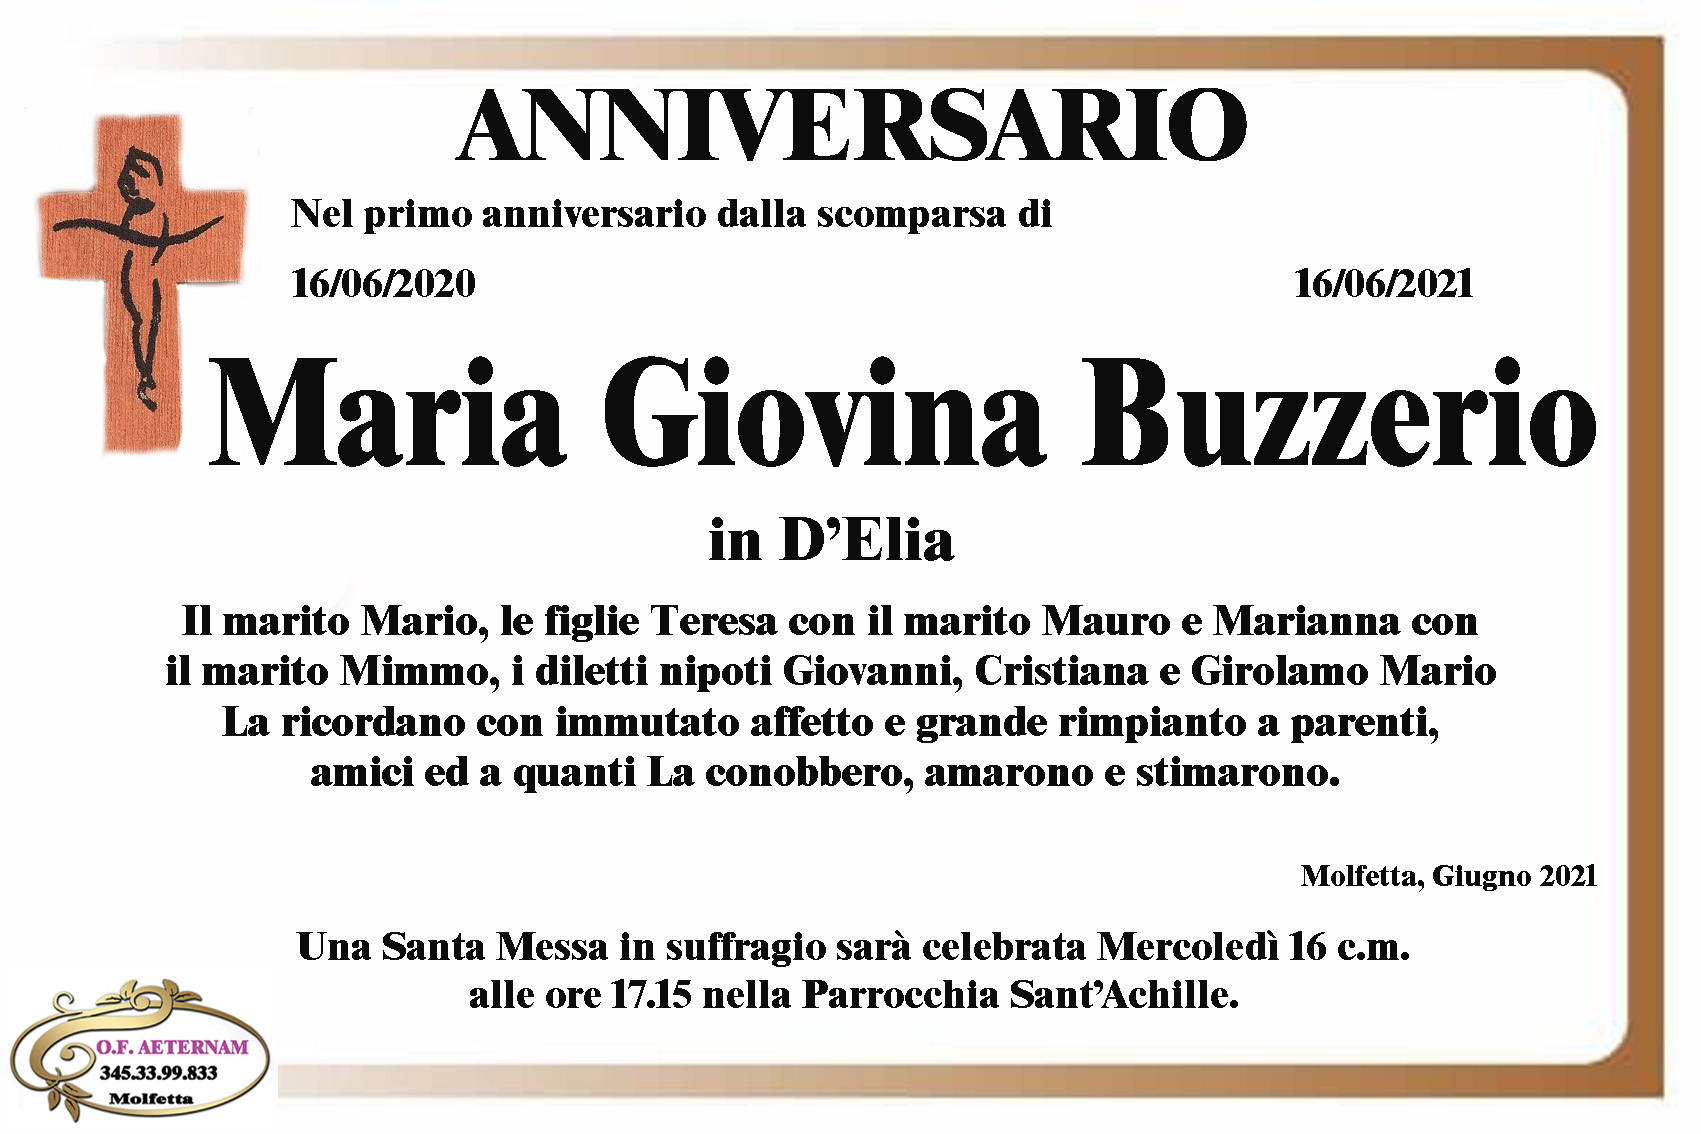 Maria Giovina Buzzerio